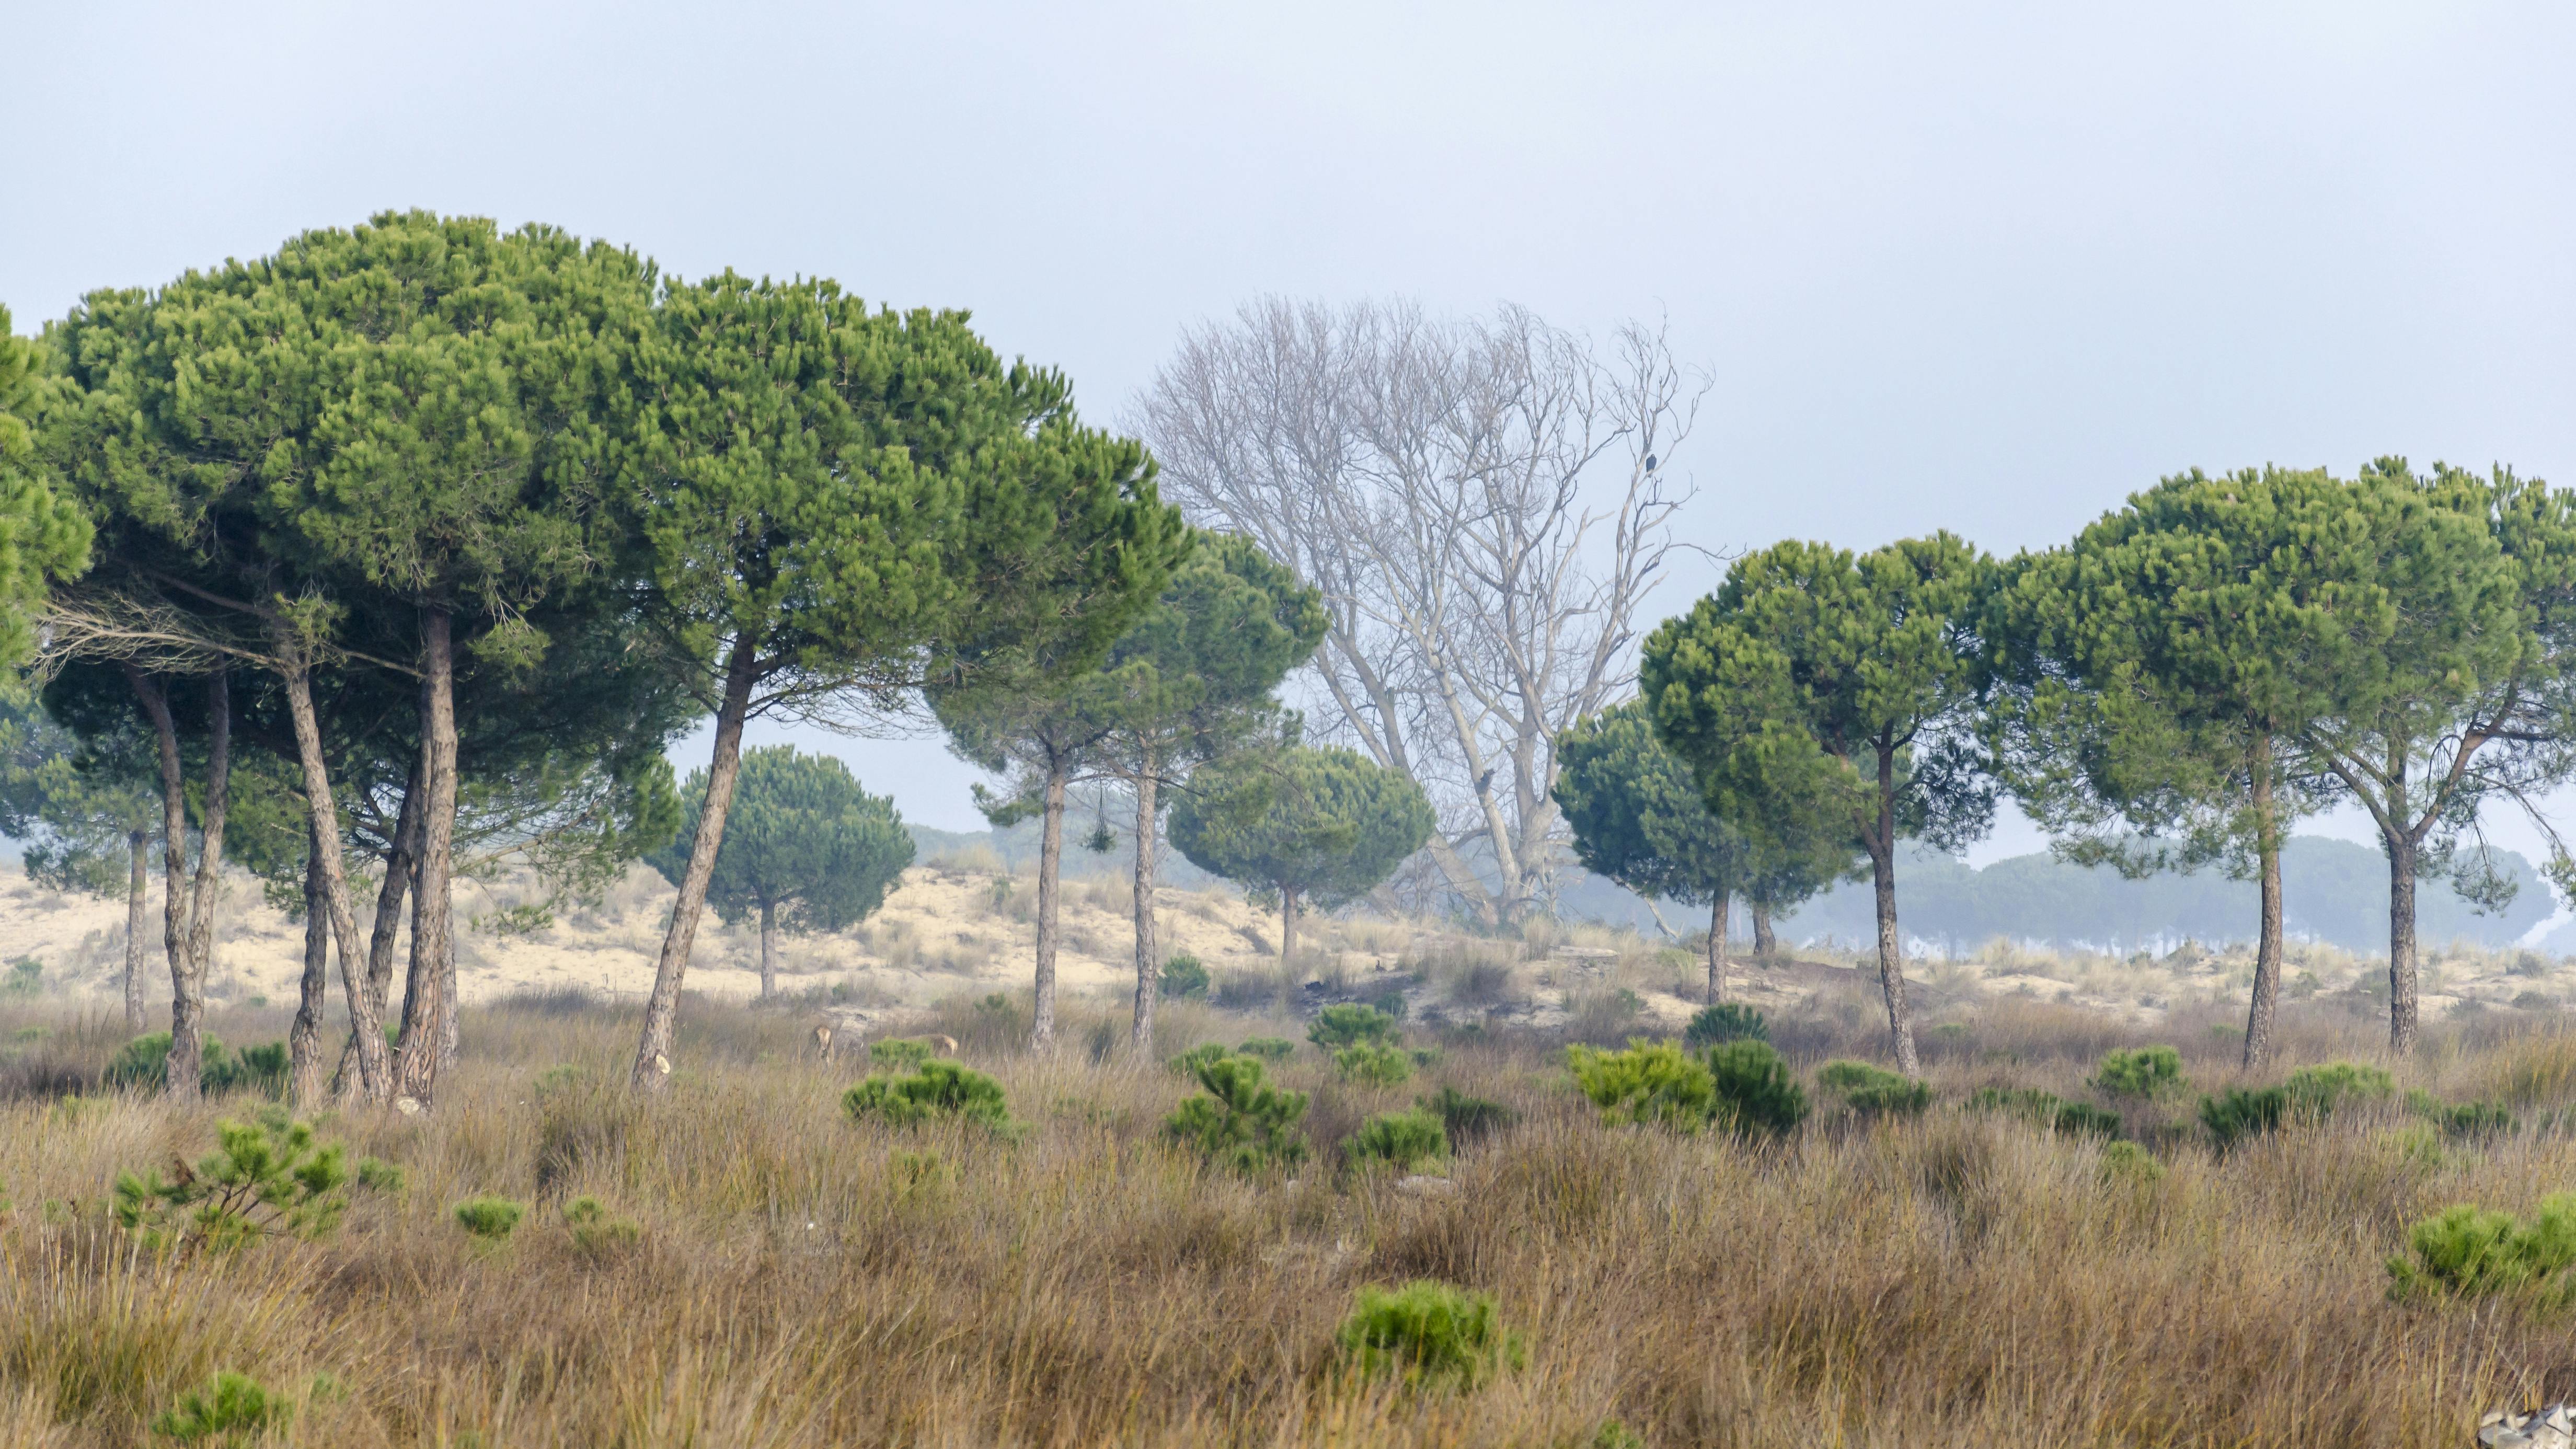 Parc national de Doñana